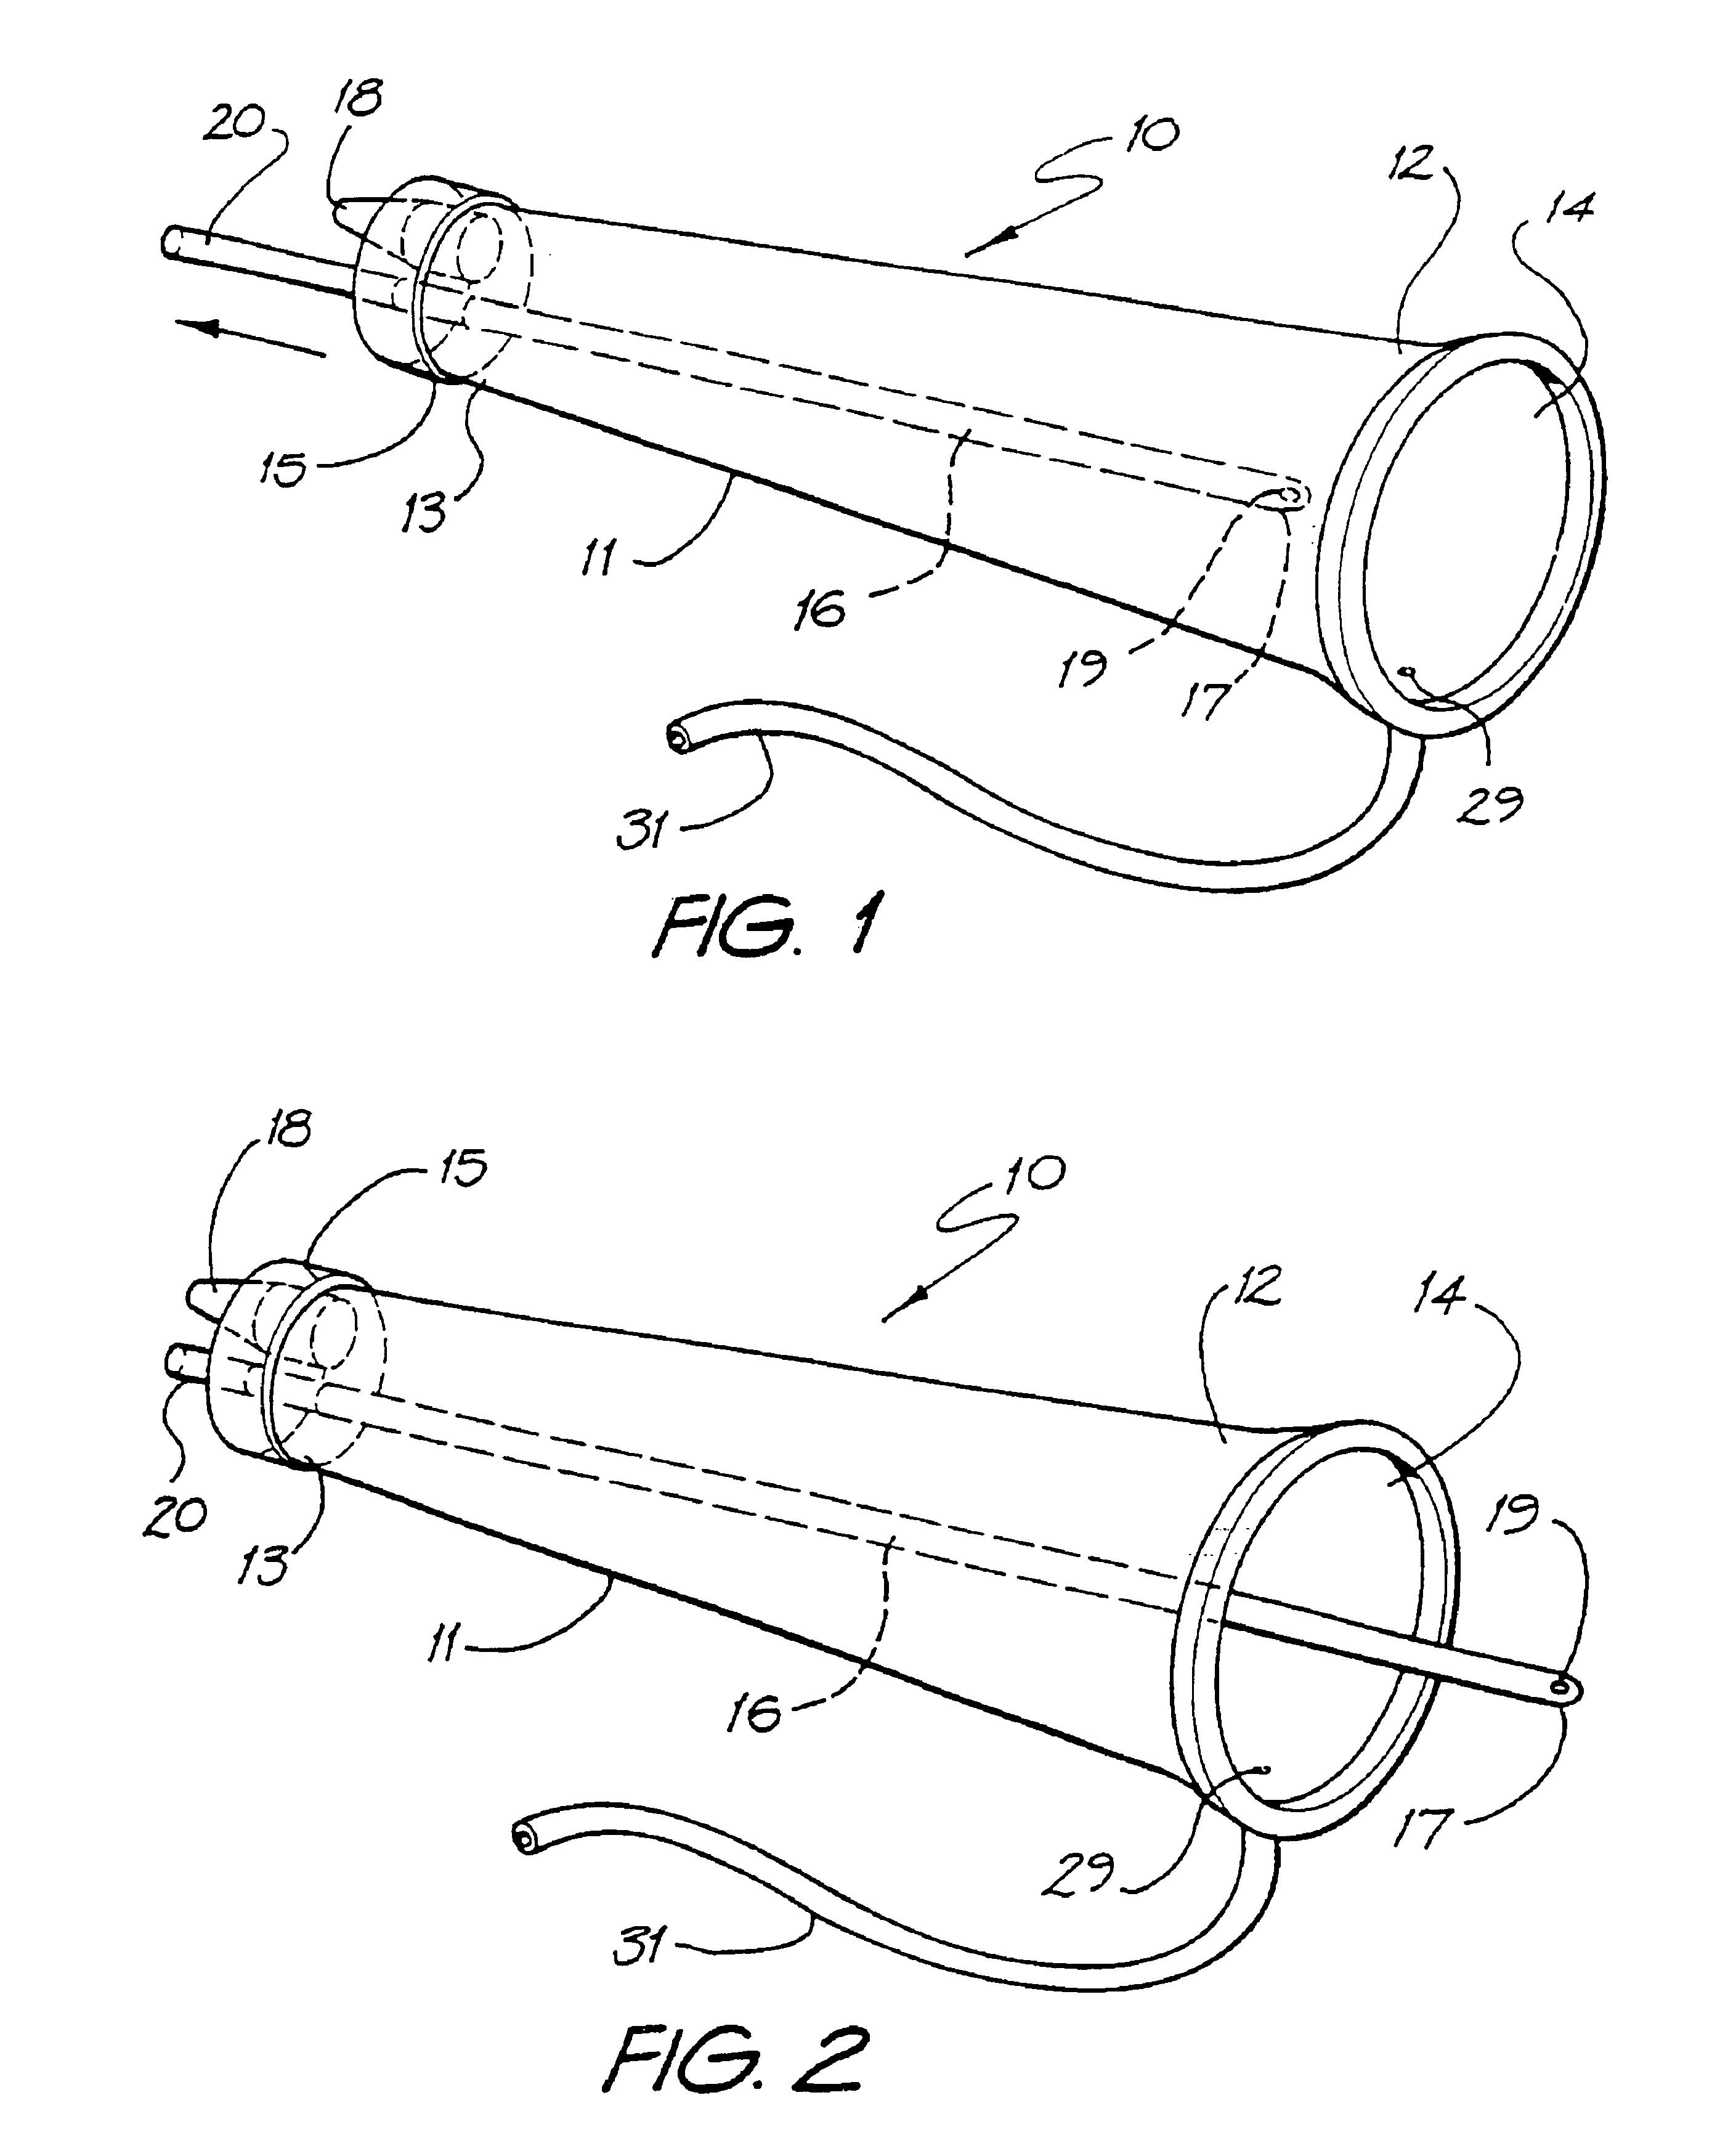 Colostomy pump device